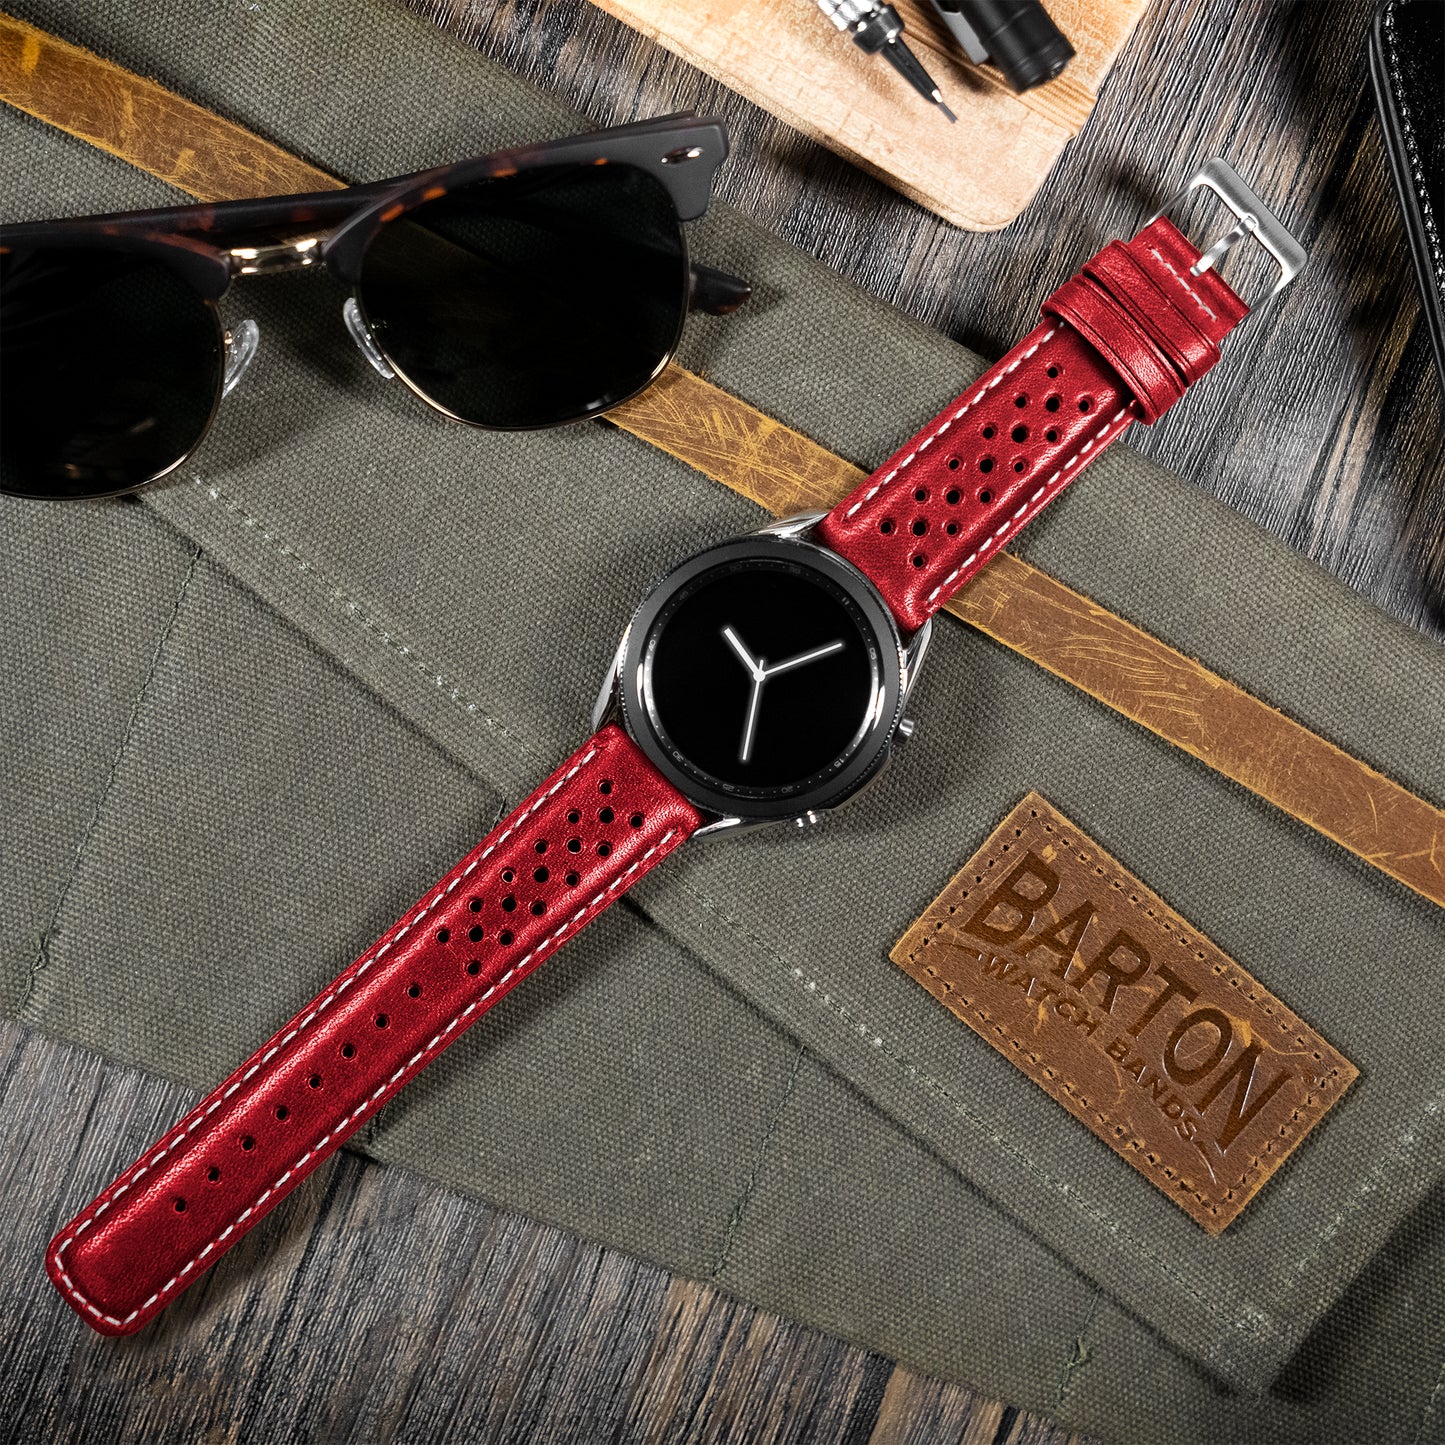 Samsung Galaxy Watch Racing Horween Leather Crimson Red Linen Stitch Watch Band